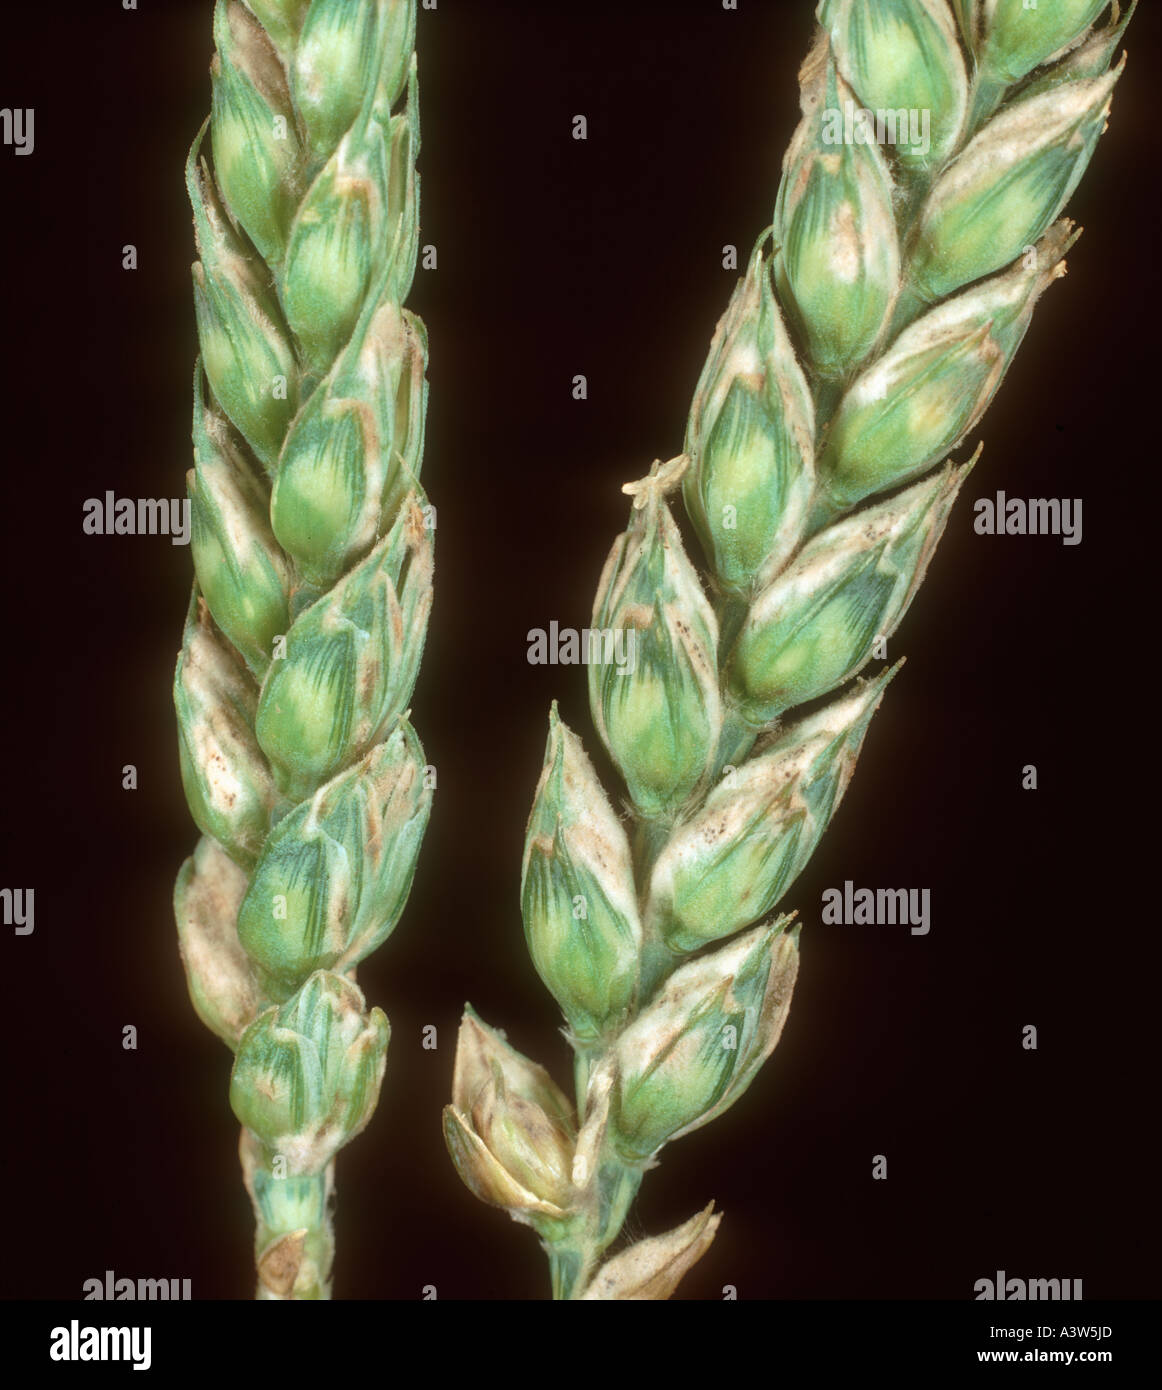 Powdery mildew (Erysiphe graminis f.sp. tritici) infection on wheat ears Stock Photo